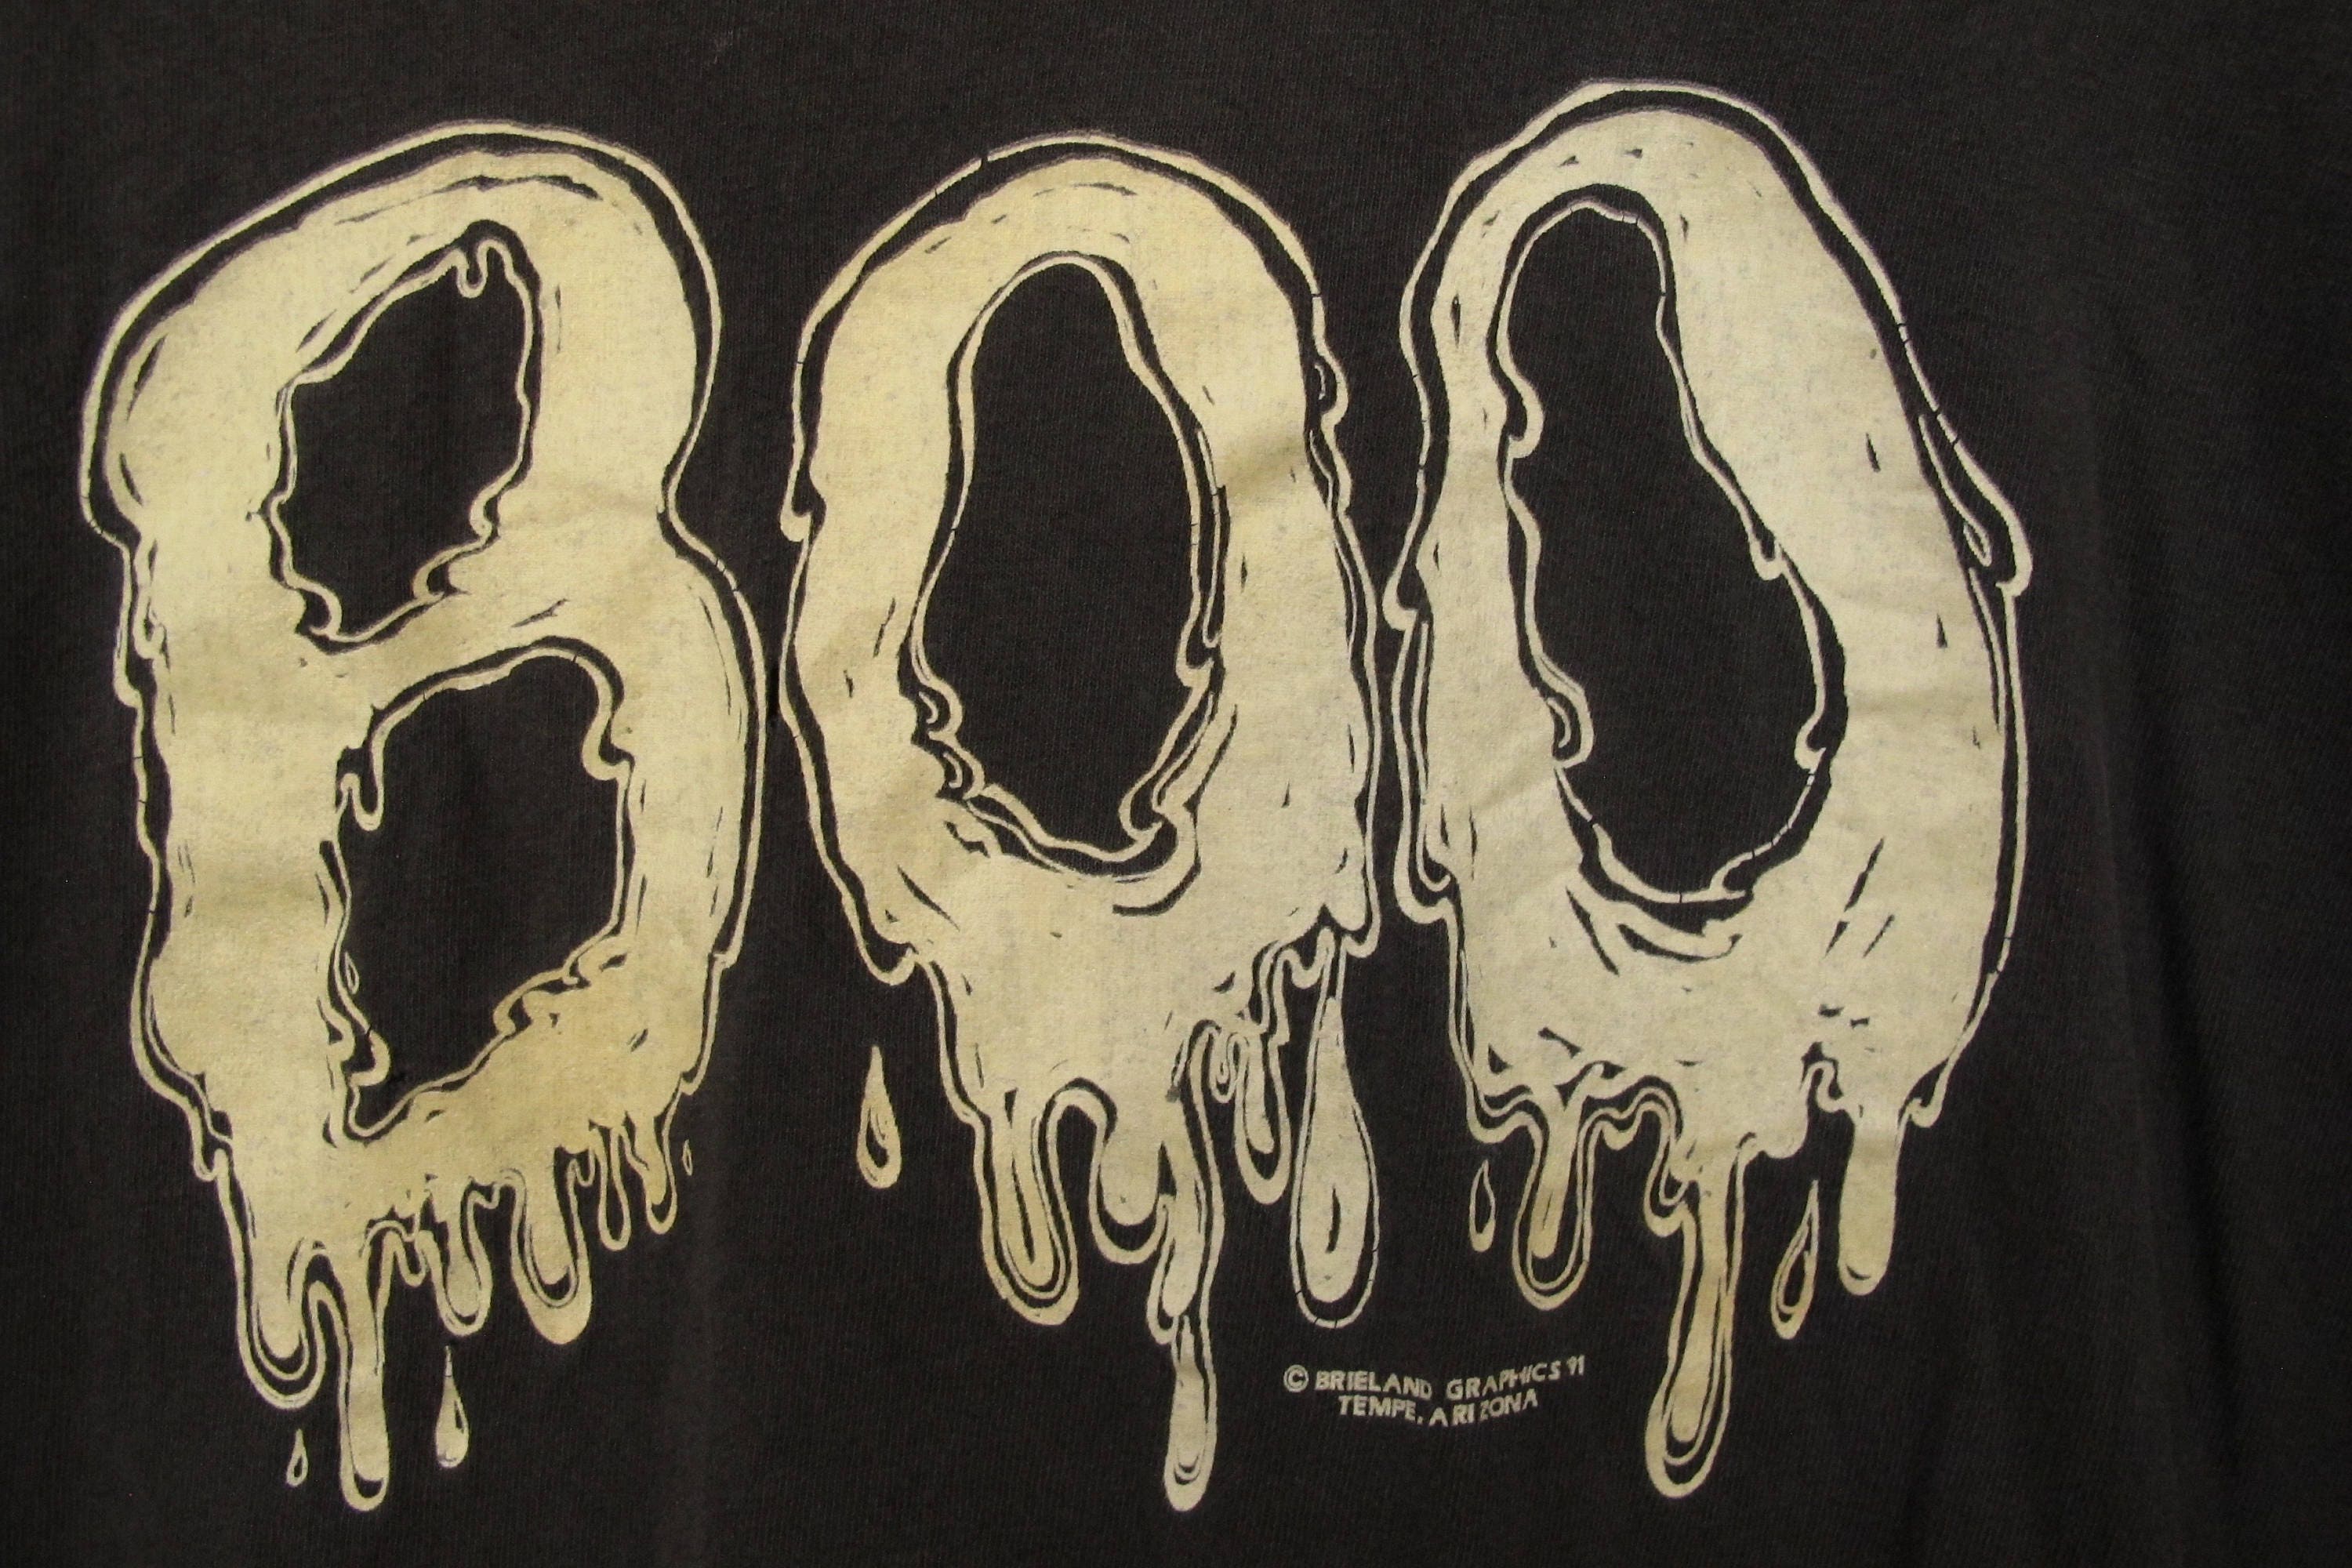 Boo Halloween Glow in the Dark 1990s vintage Tshirt